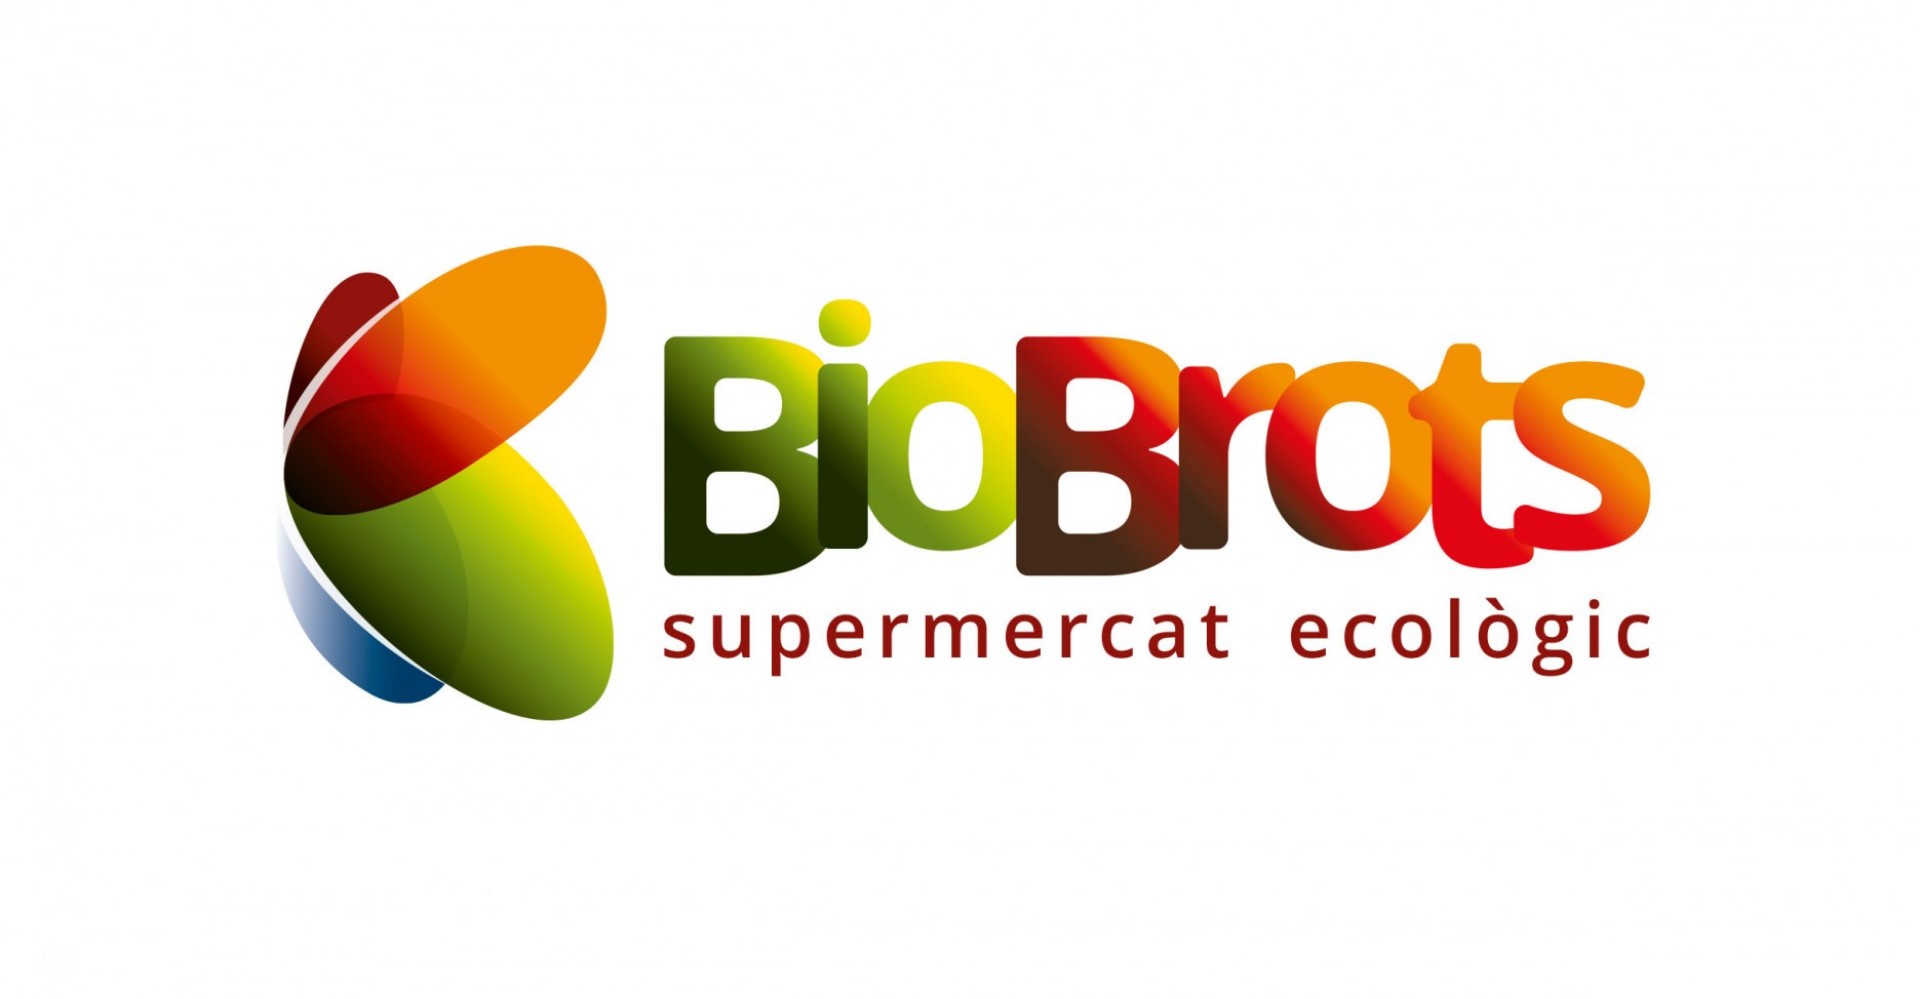 BioBrots